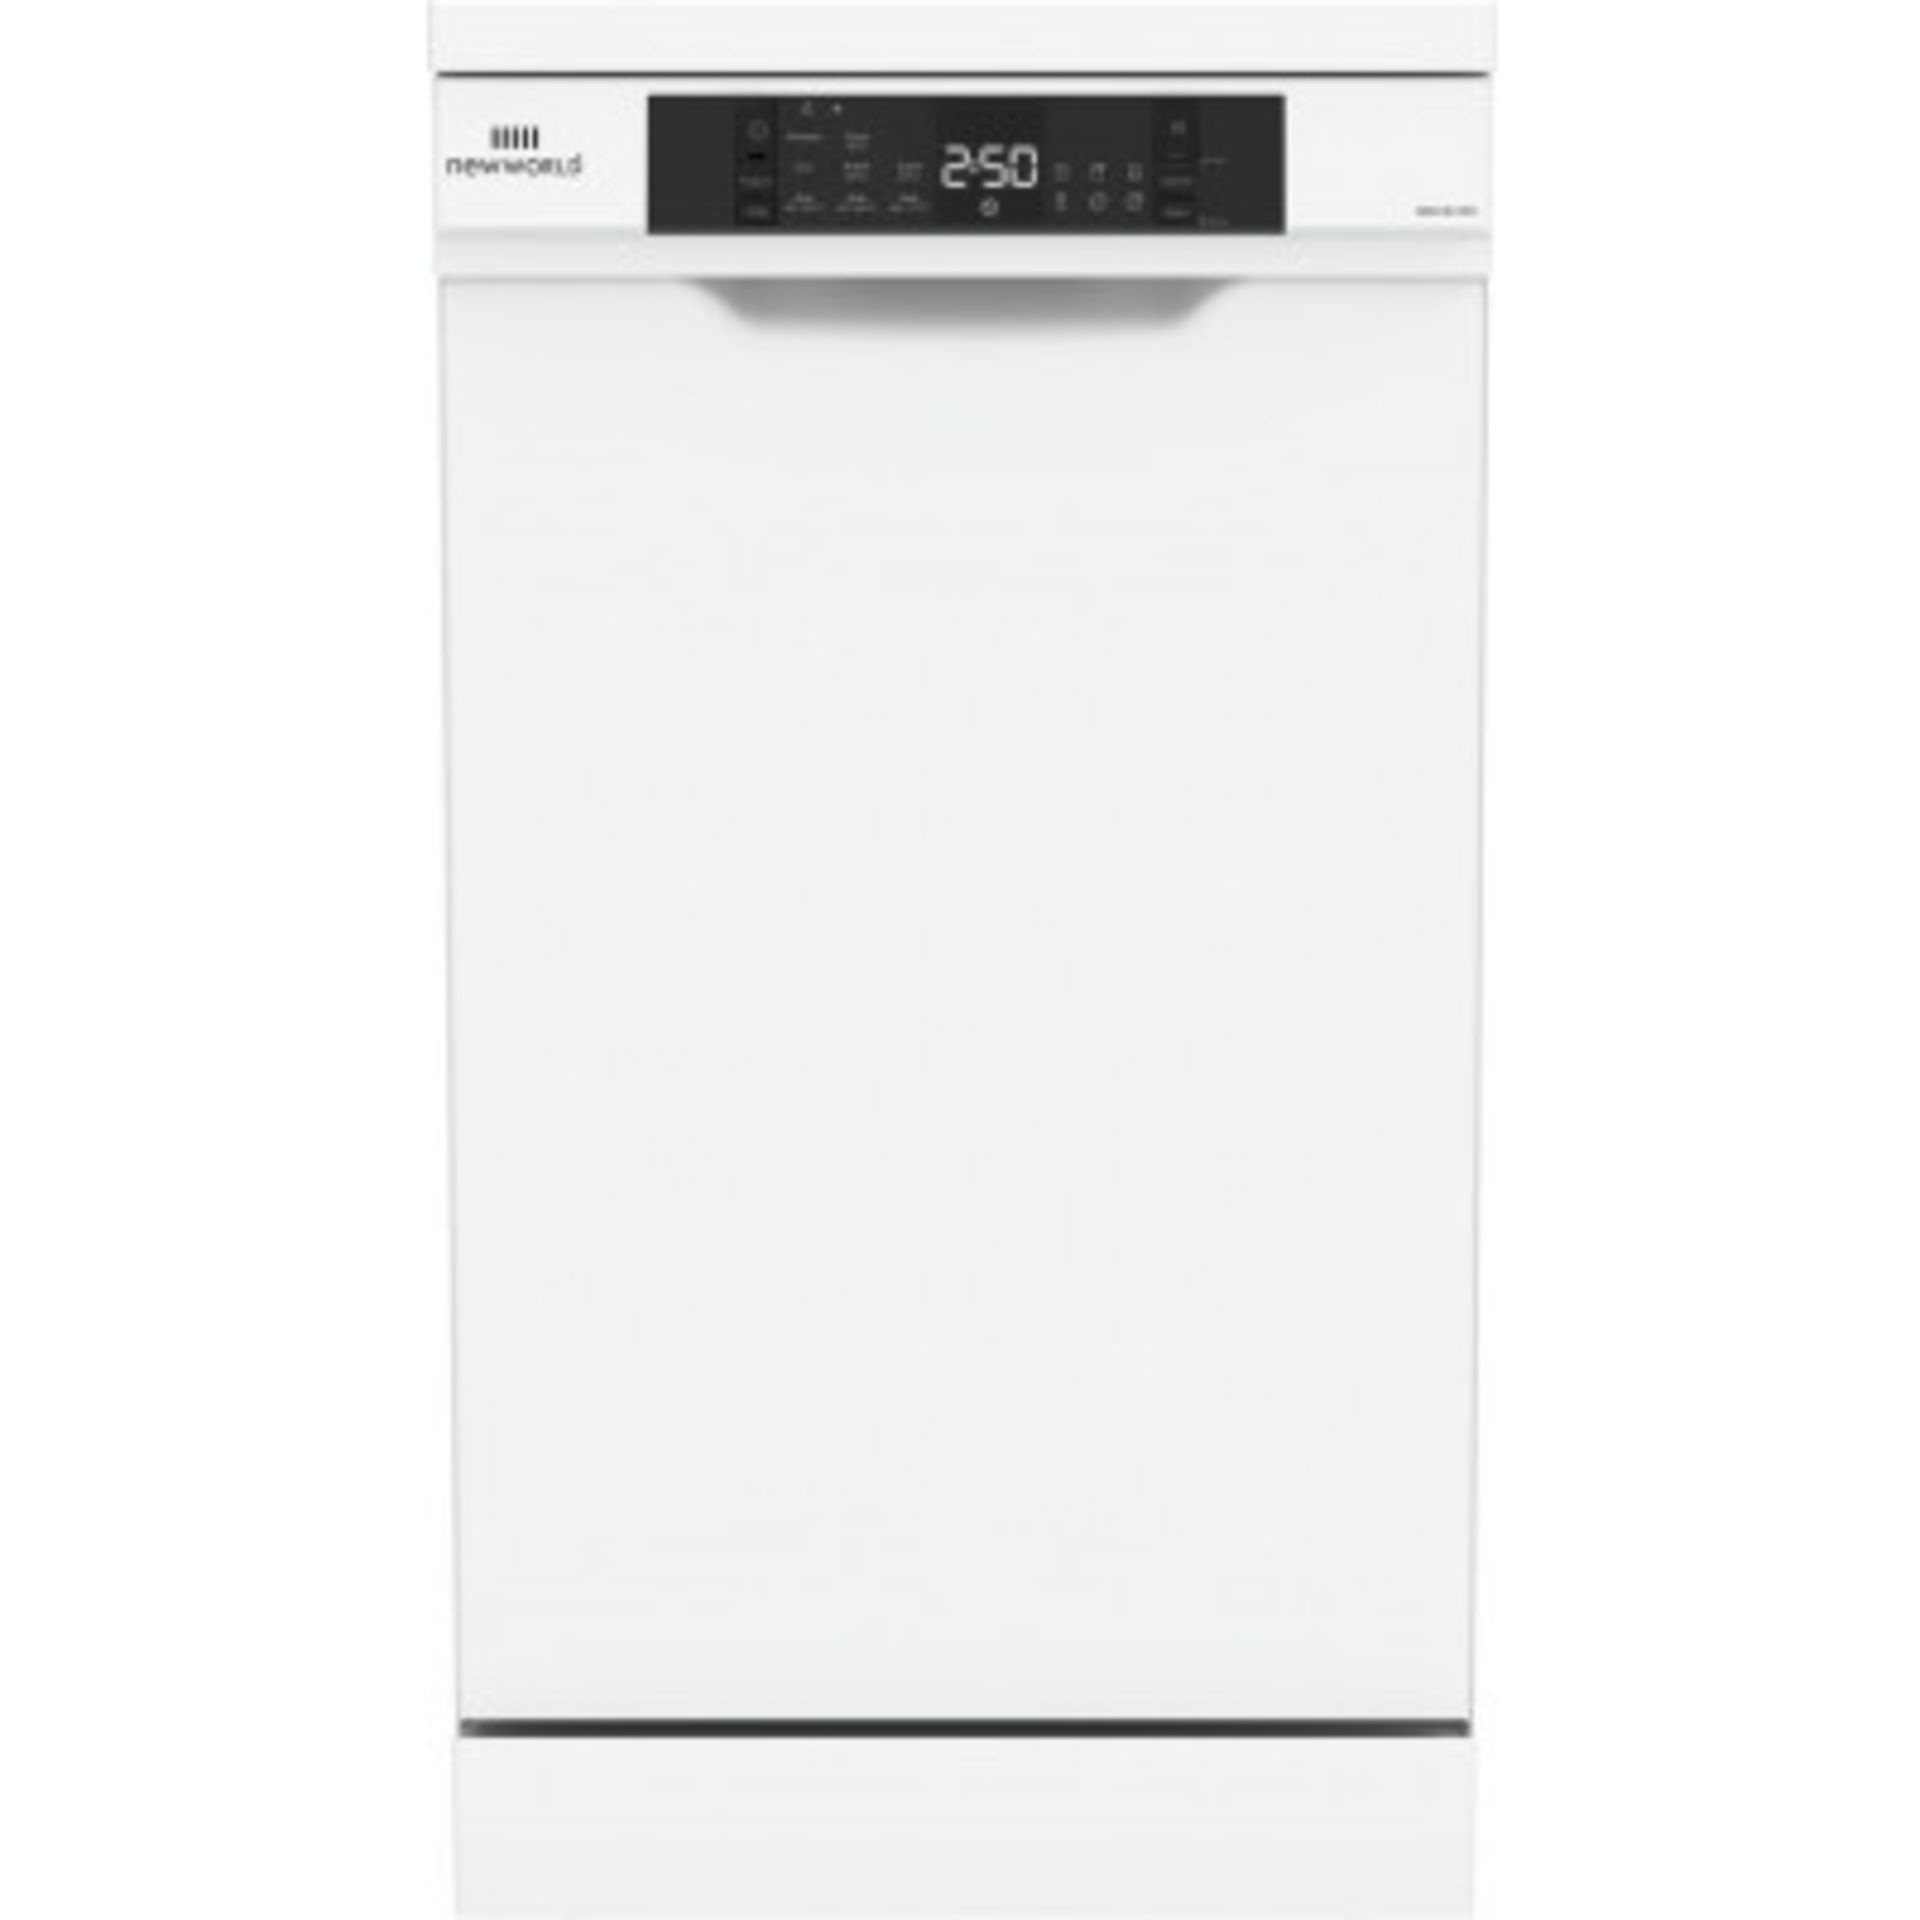 + VAT Grade A/B New World NWLCSL10FS 45cm Slimline Dishwasher - Eight Programmes - Four Temperature